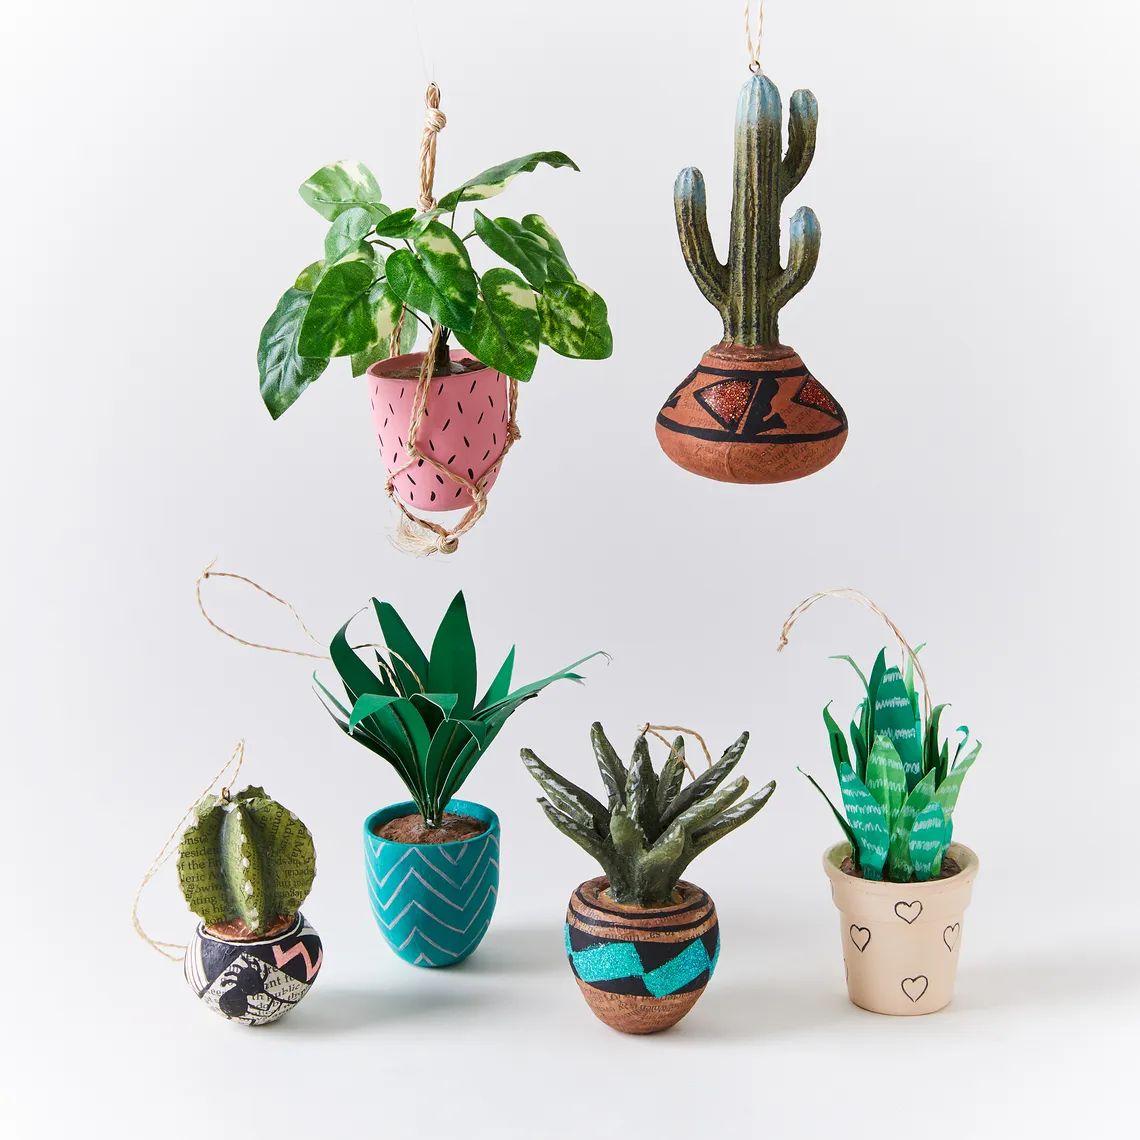 Vintage-Inspired Plant Ornaments | Food52